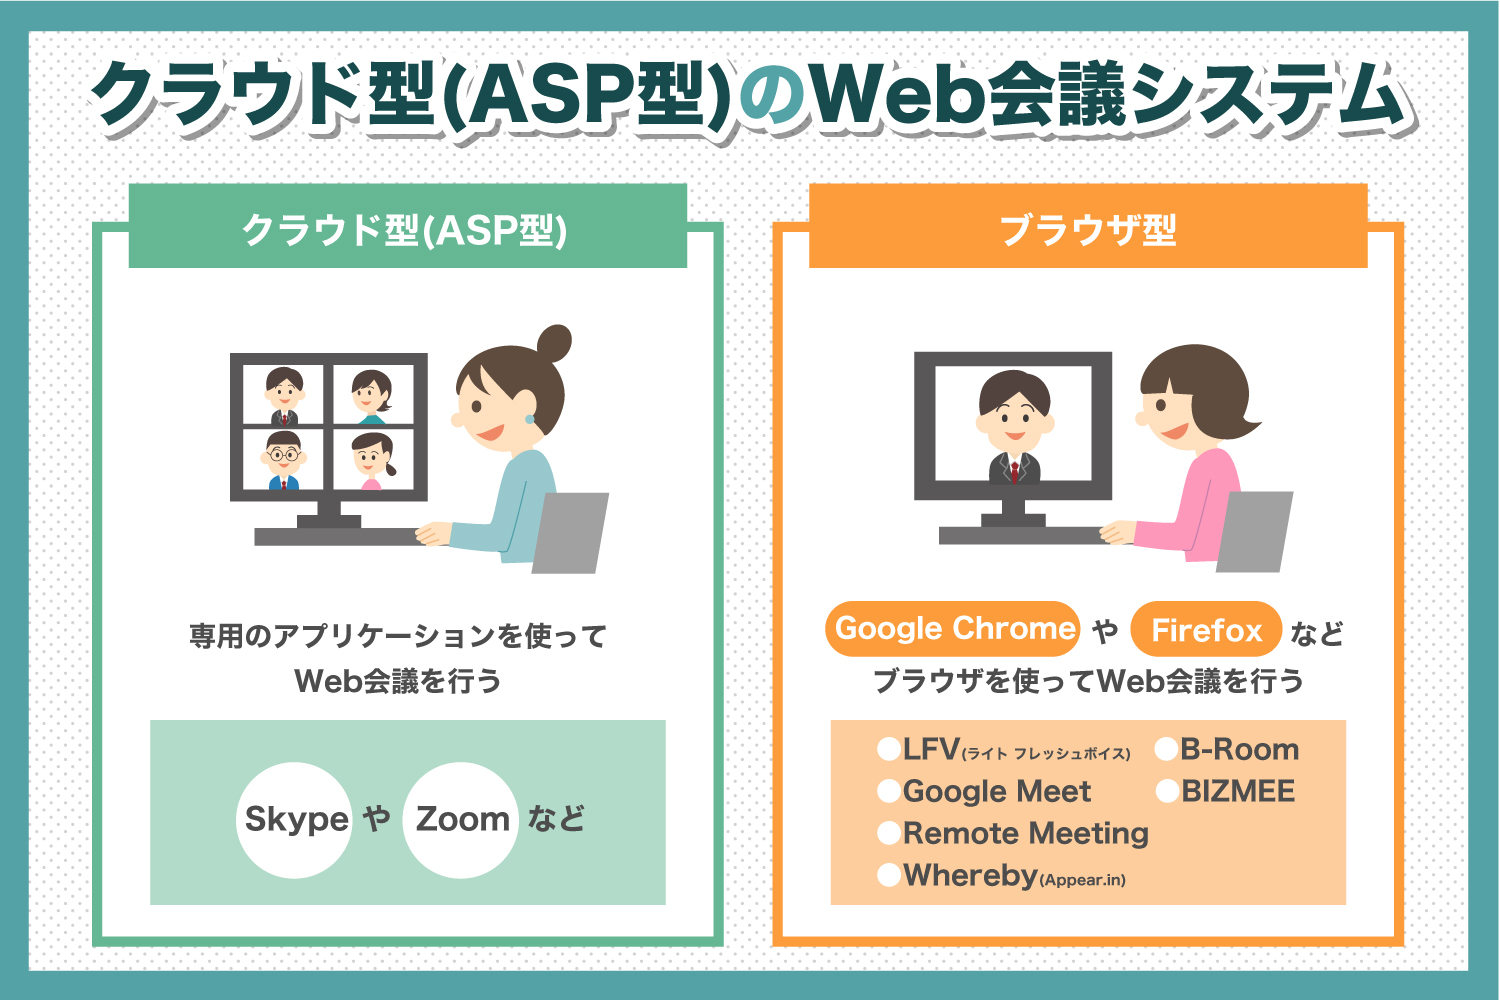 『Zoom』や『Skype』は、クラウド型（ASP型）のWeb会議システムです！